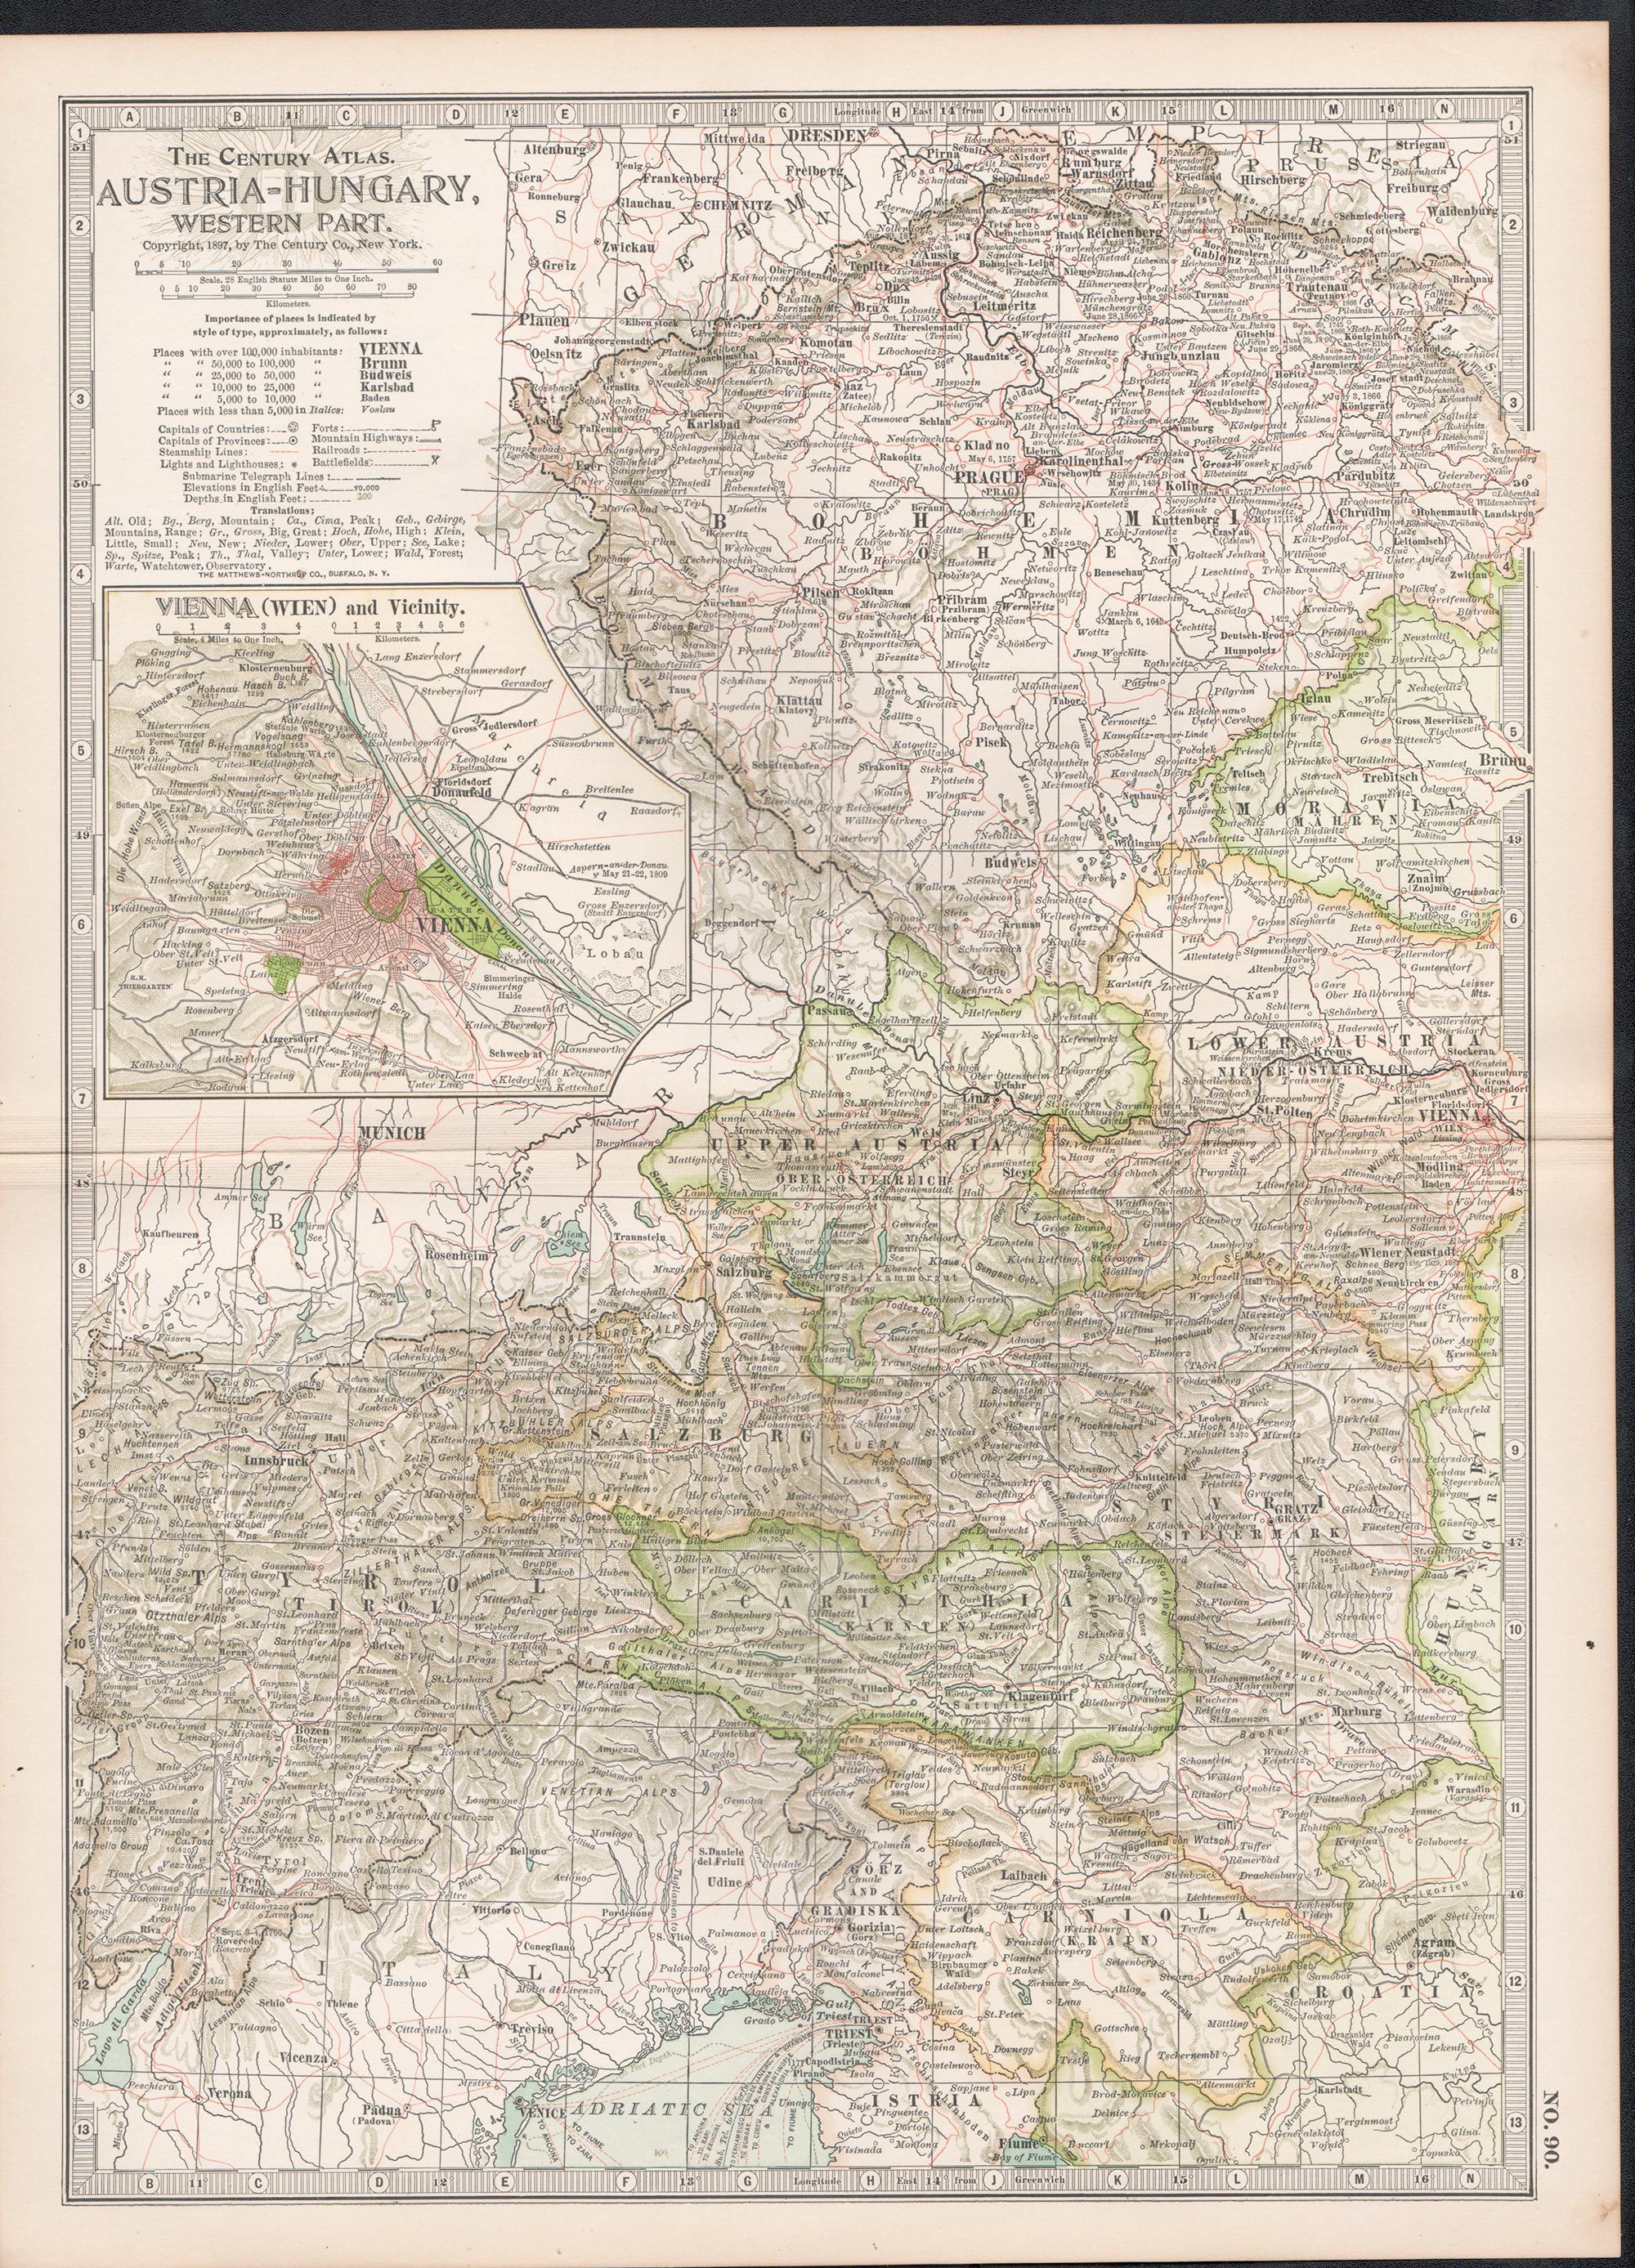 Austria-Hungary, Western Part. Century Atlas antique vintage map - Print by Unknown